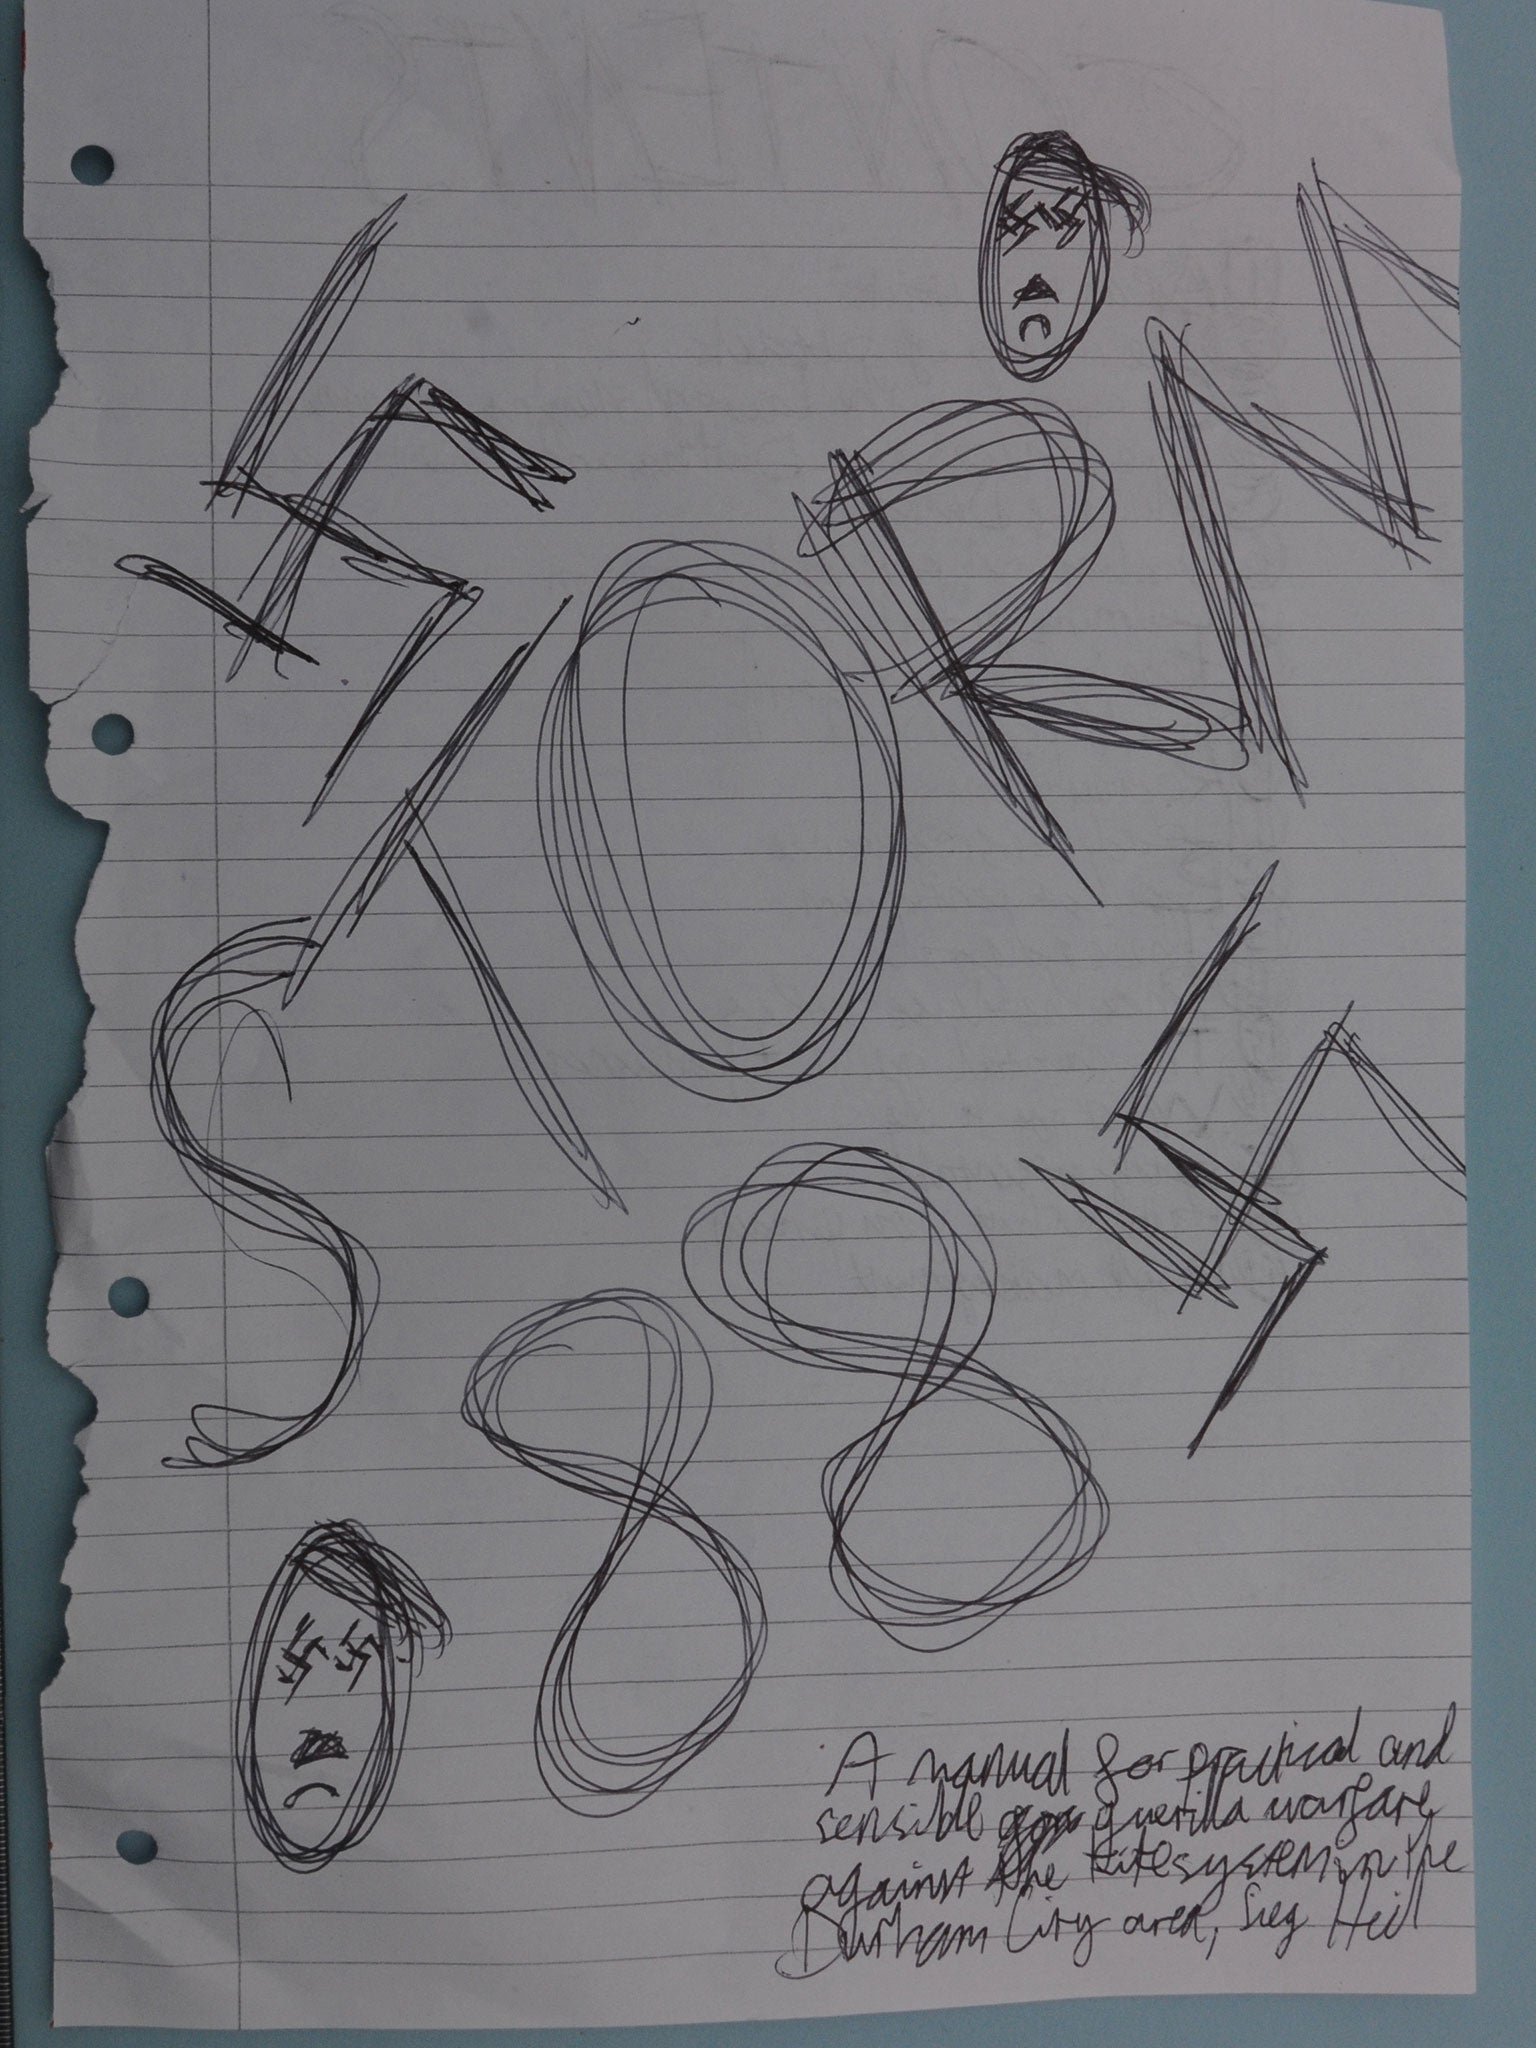 The cover of the teenager's handwritten terrorist manifesto